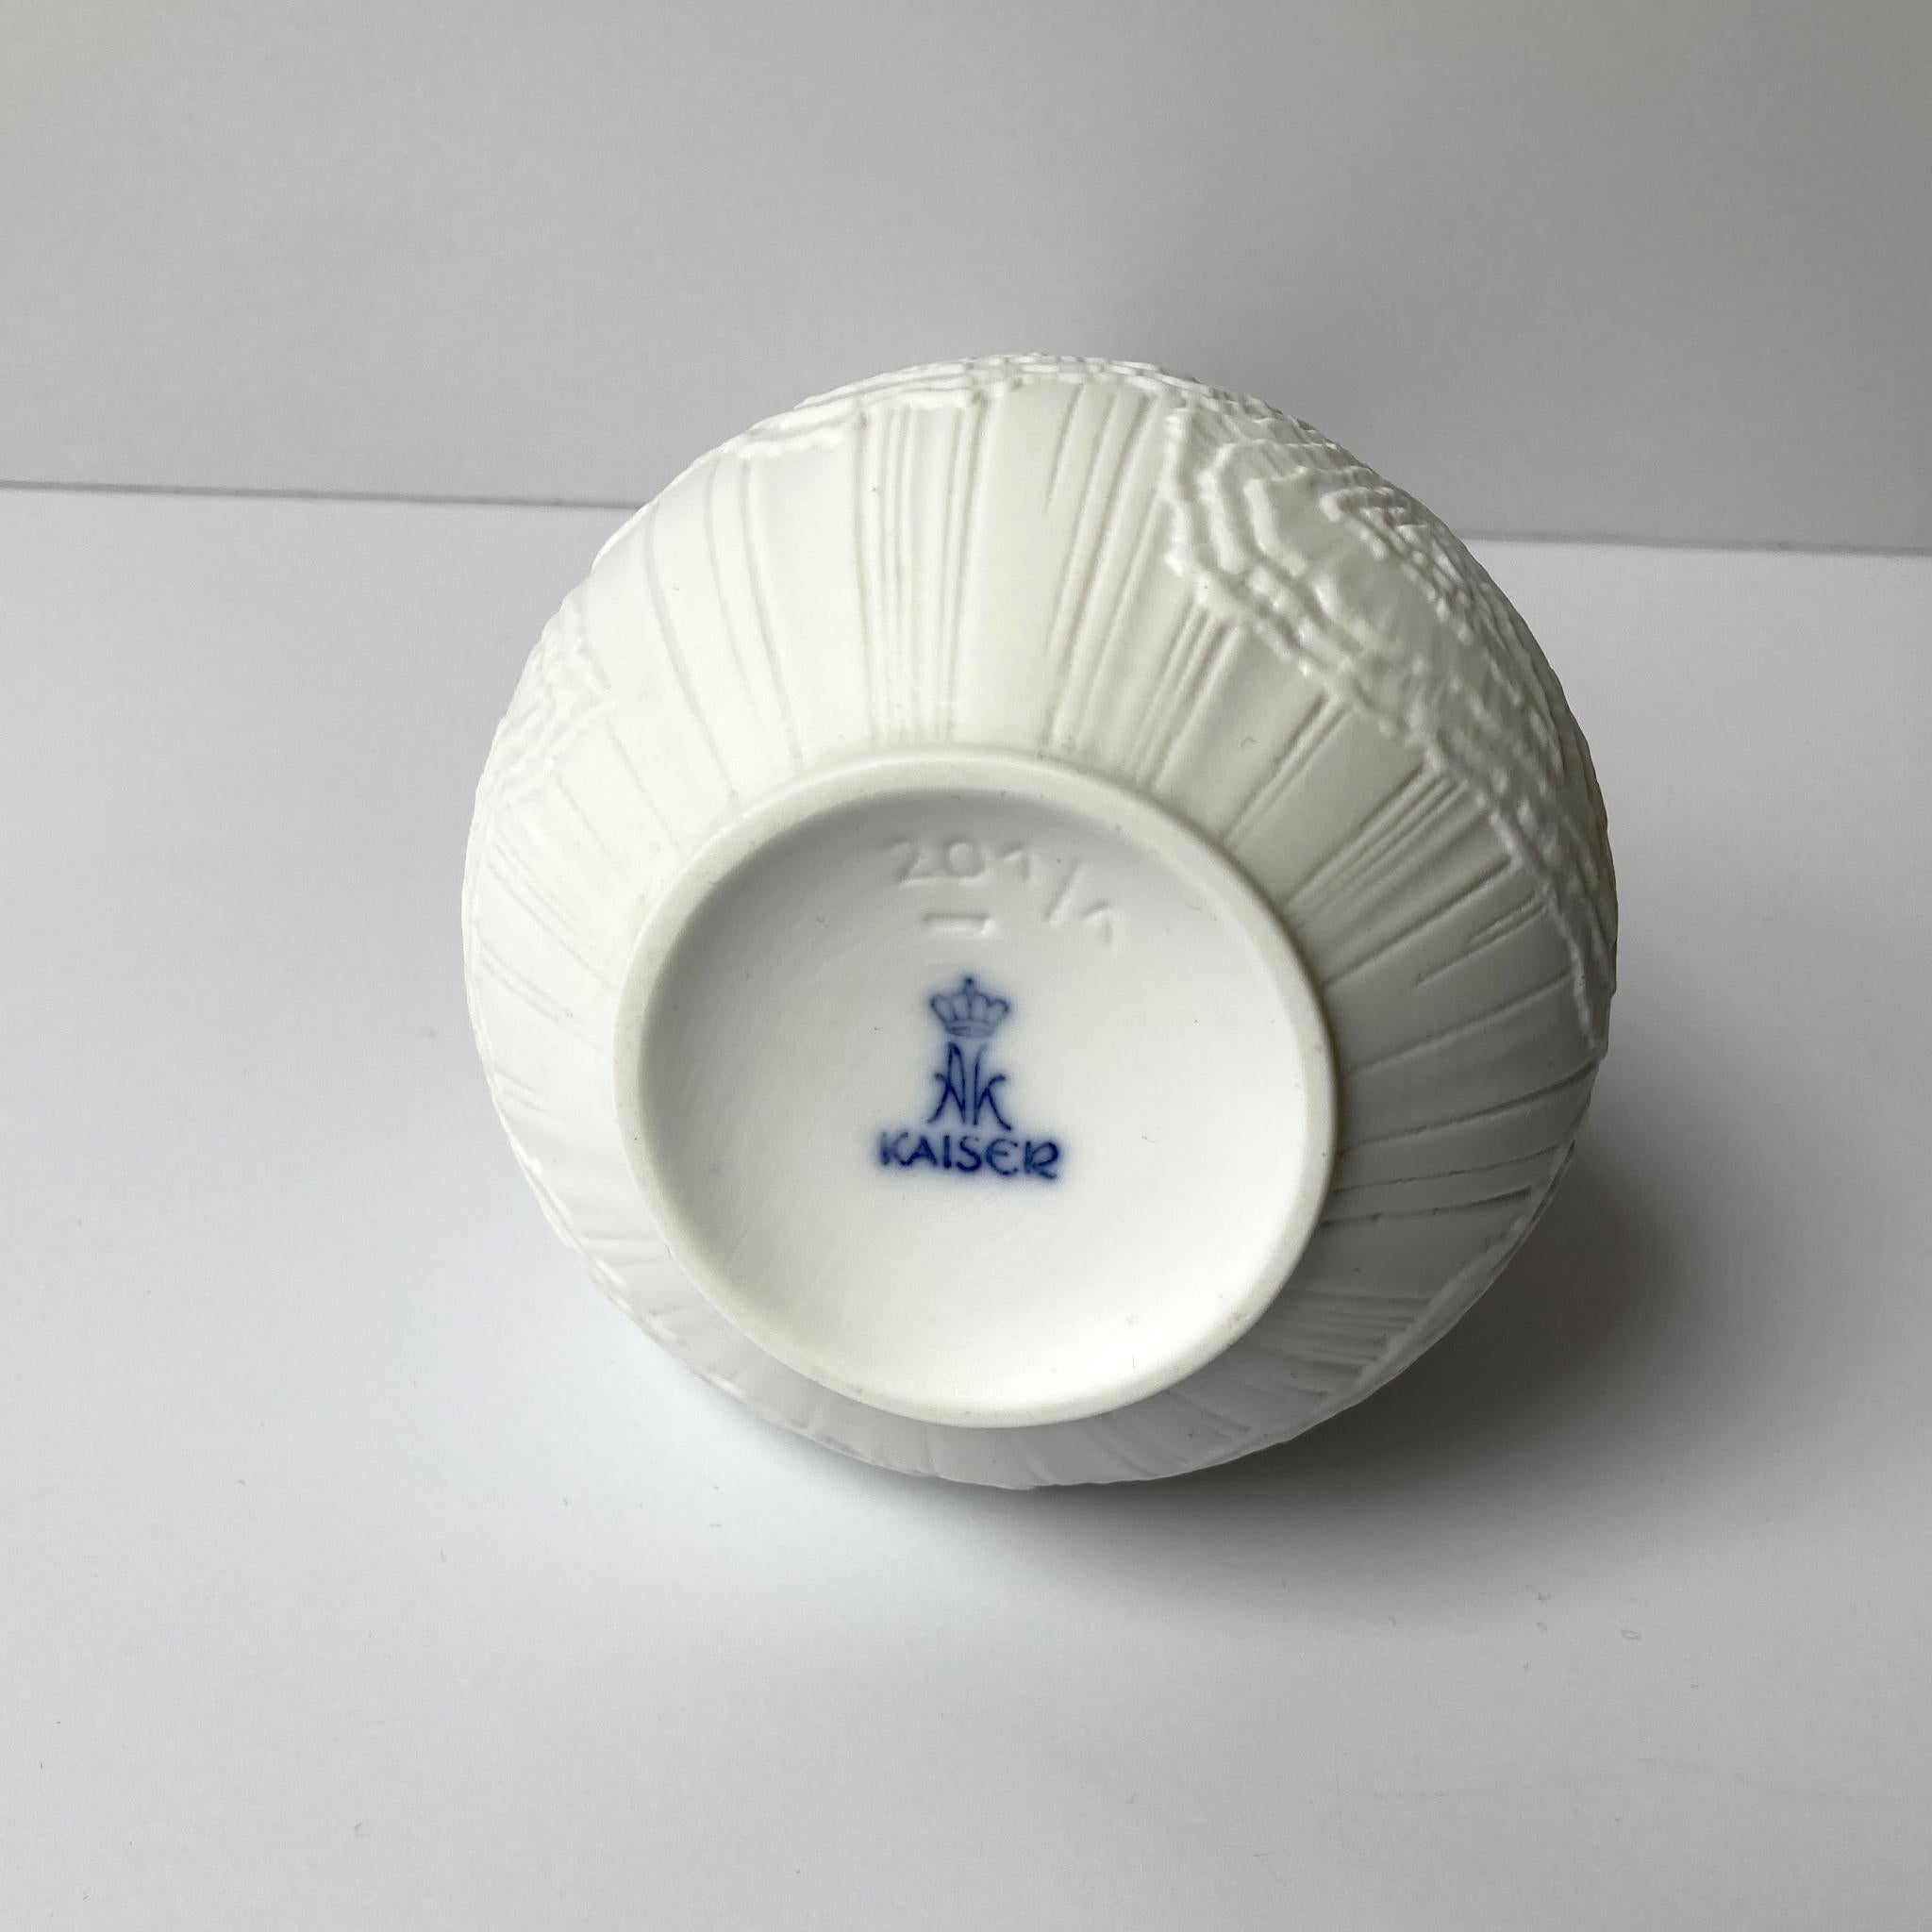 Ceramic AK Kaiser Textured White Bisque Vase, 1970s For Sale